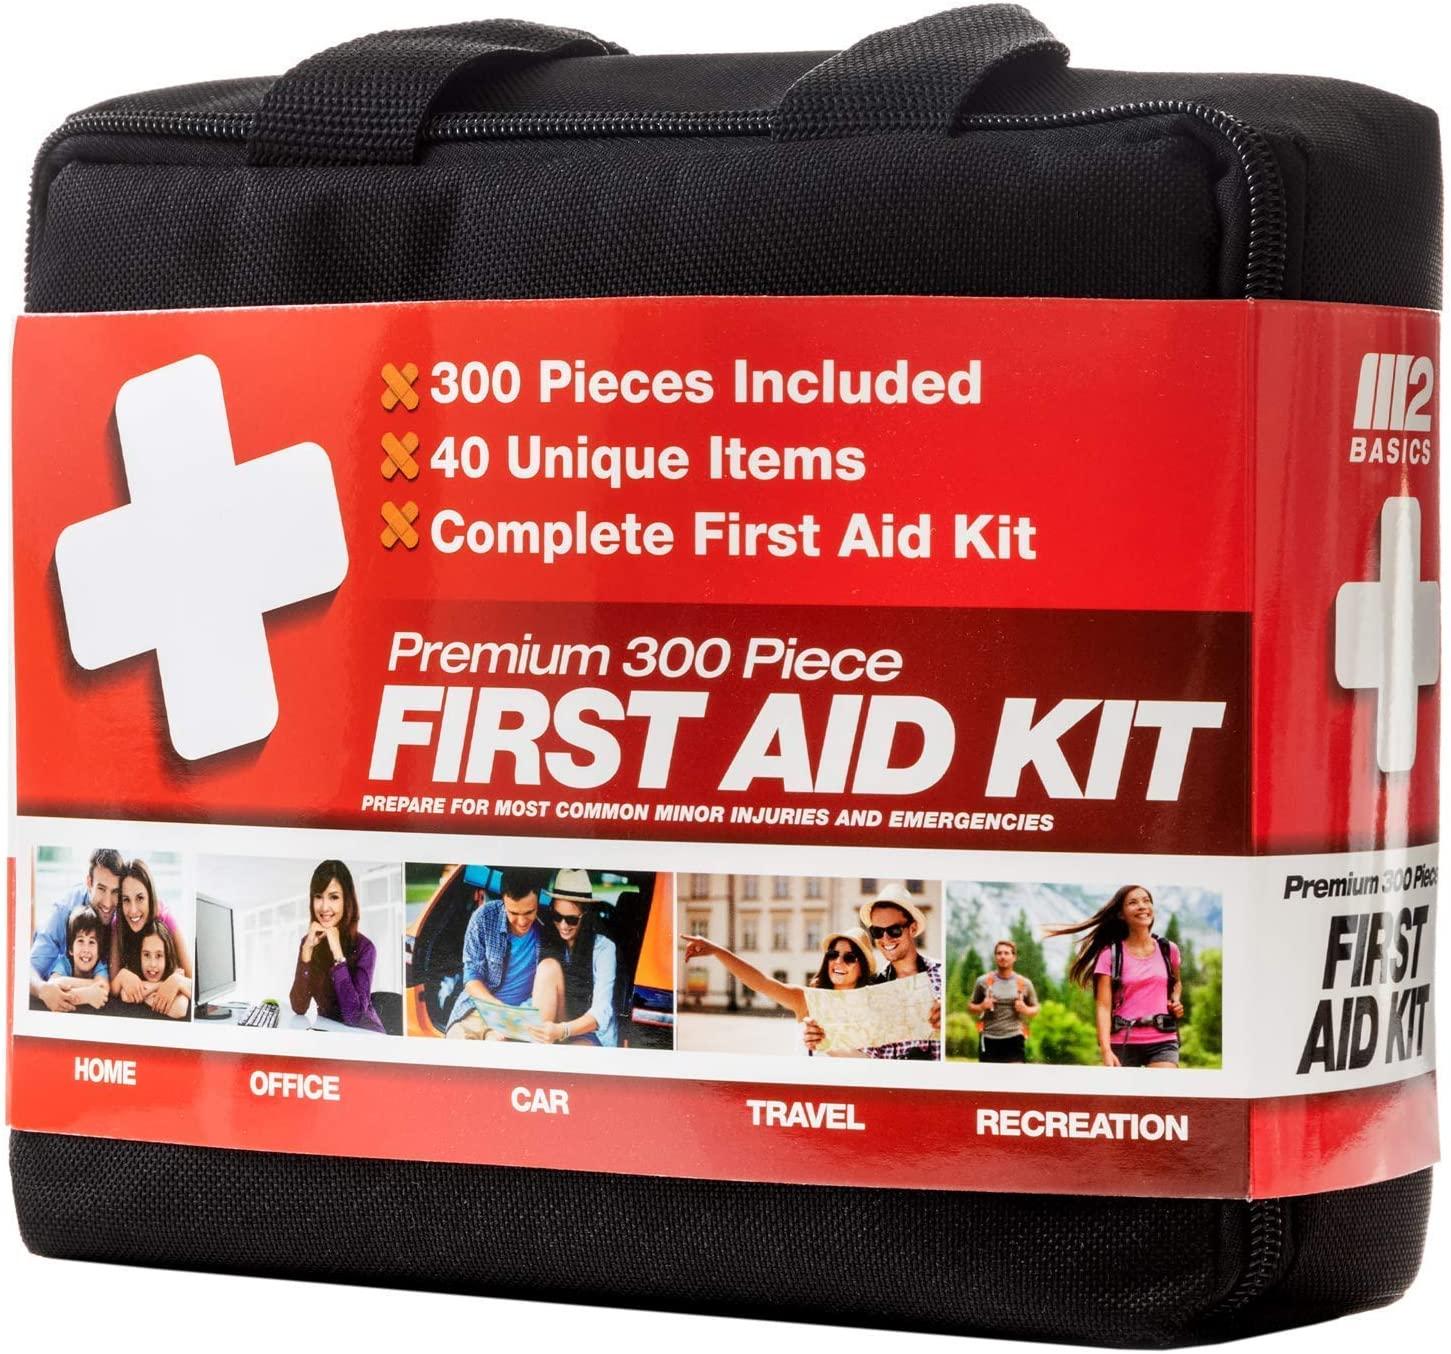 M2 BASICS 300 Piece (40 Unique Items) First Aid Kit, Premium Emergency Kits